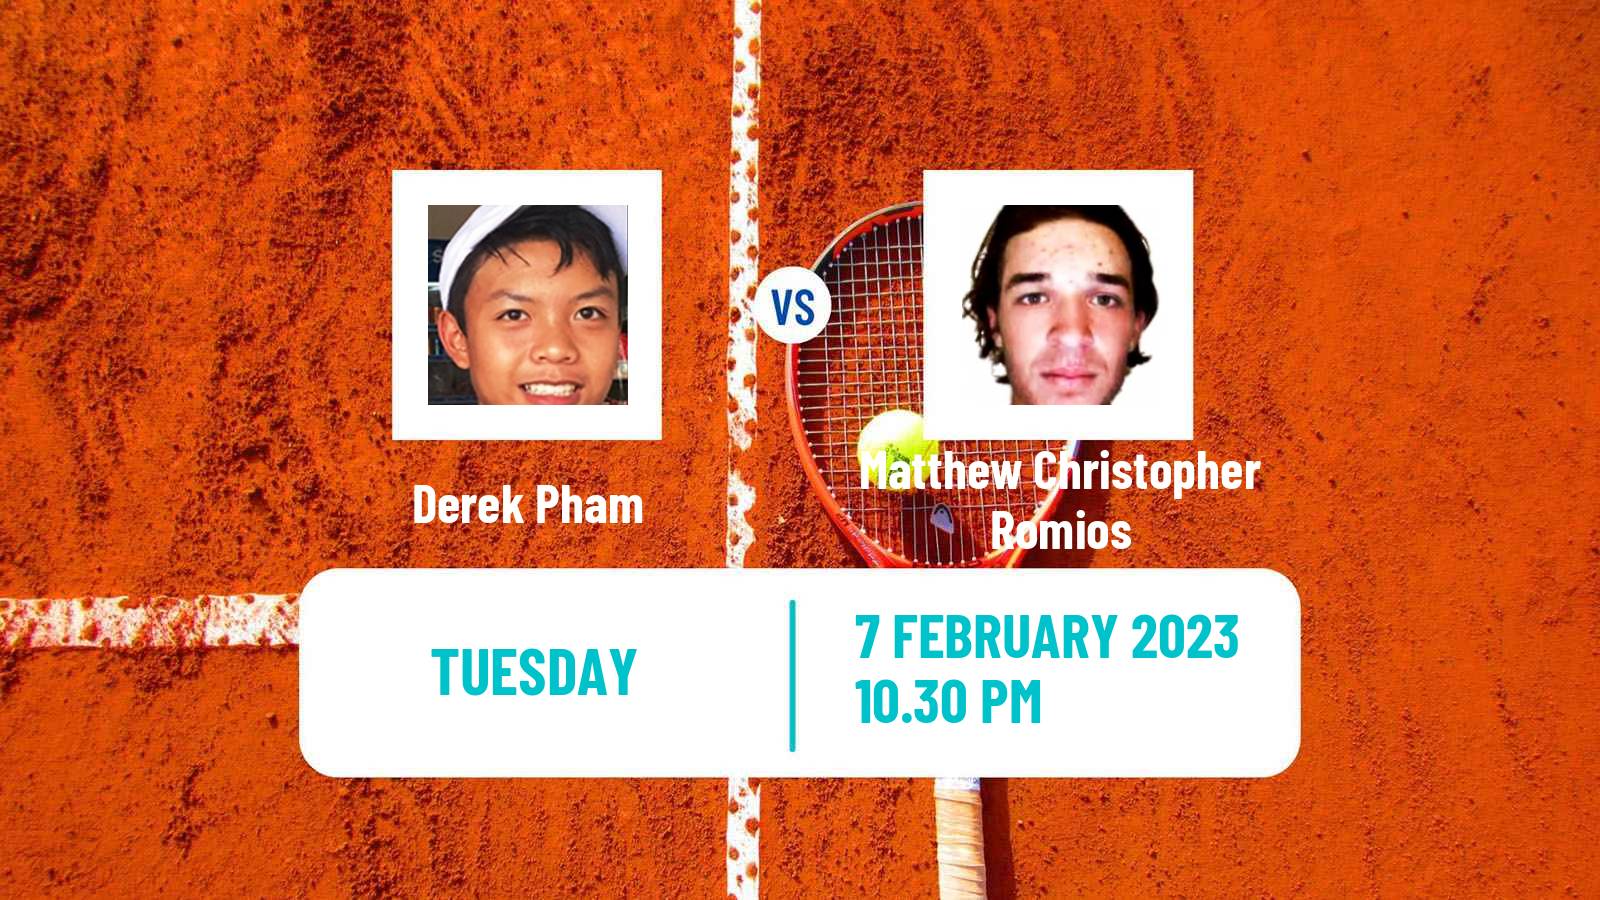 Tennis ITF Tournaments Derek Pham - Matthew Christopher Romios